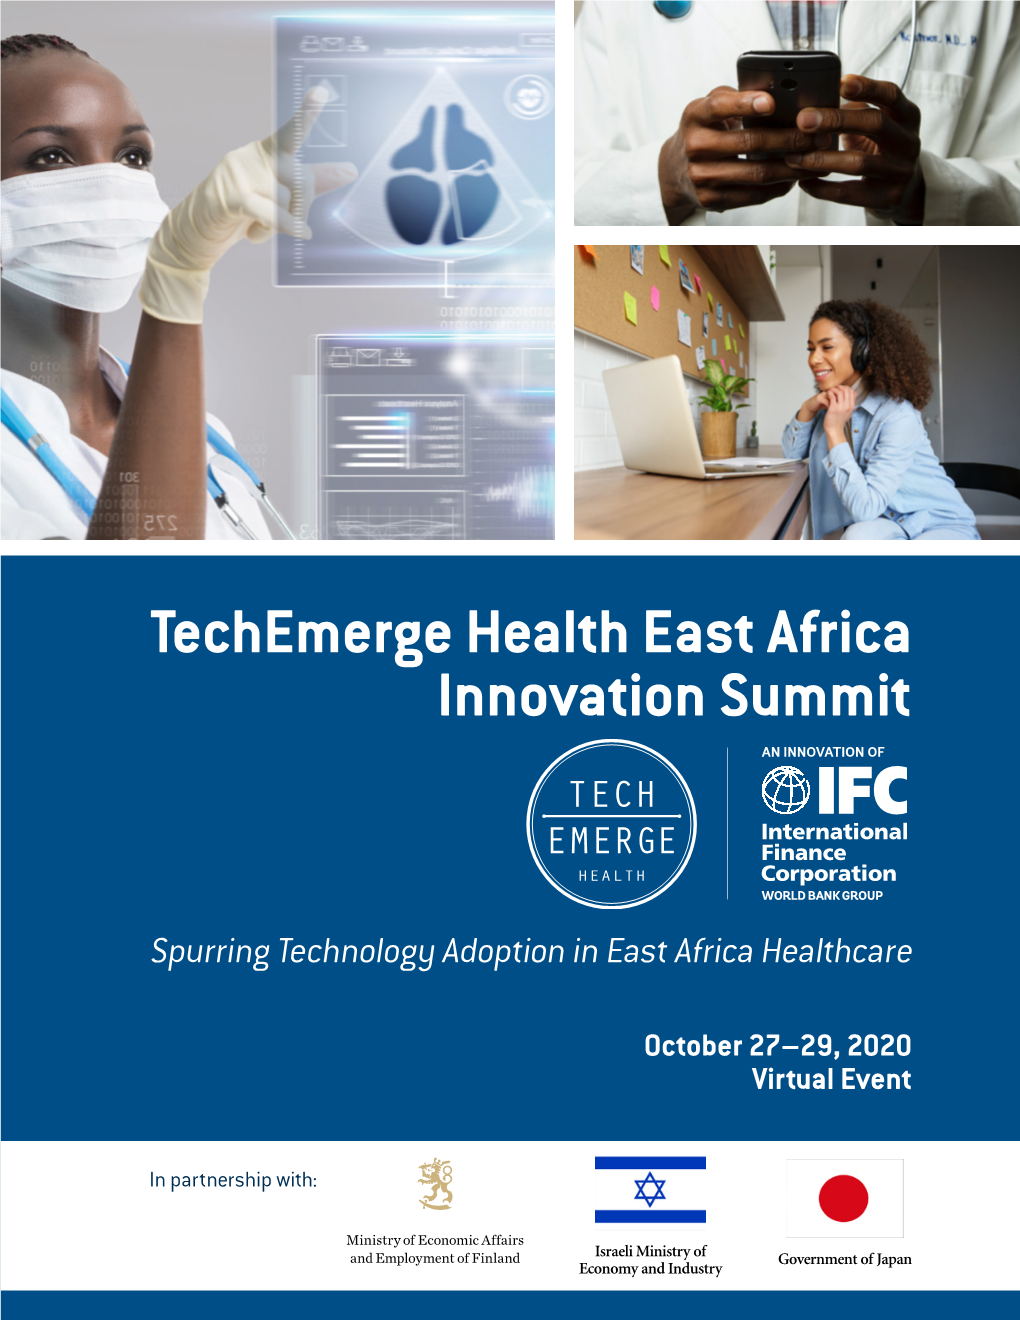 Techemerge Health East Africa Innovation Summit